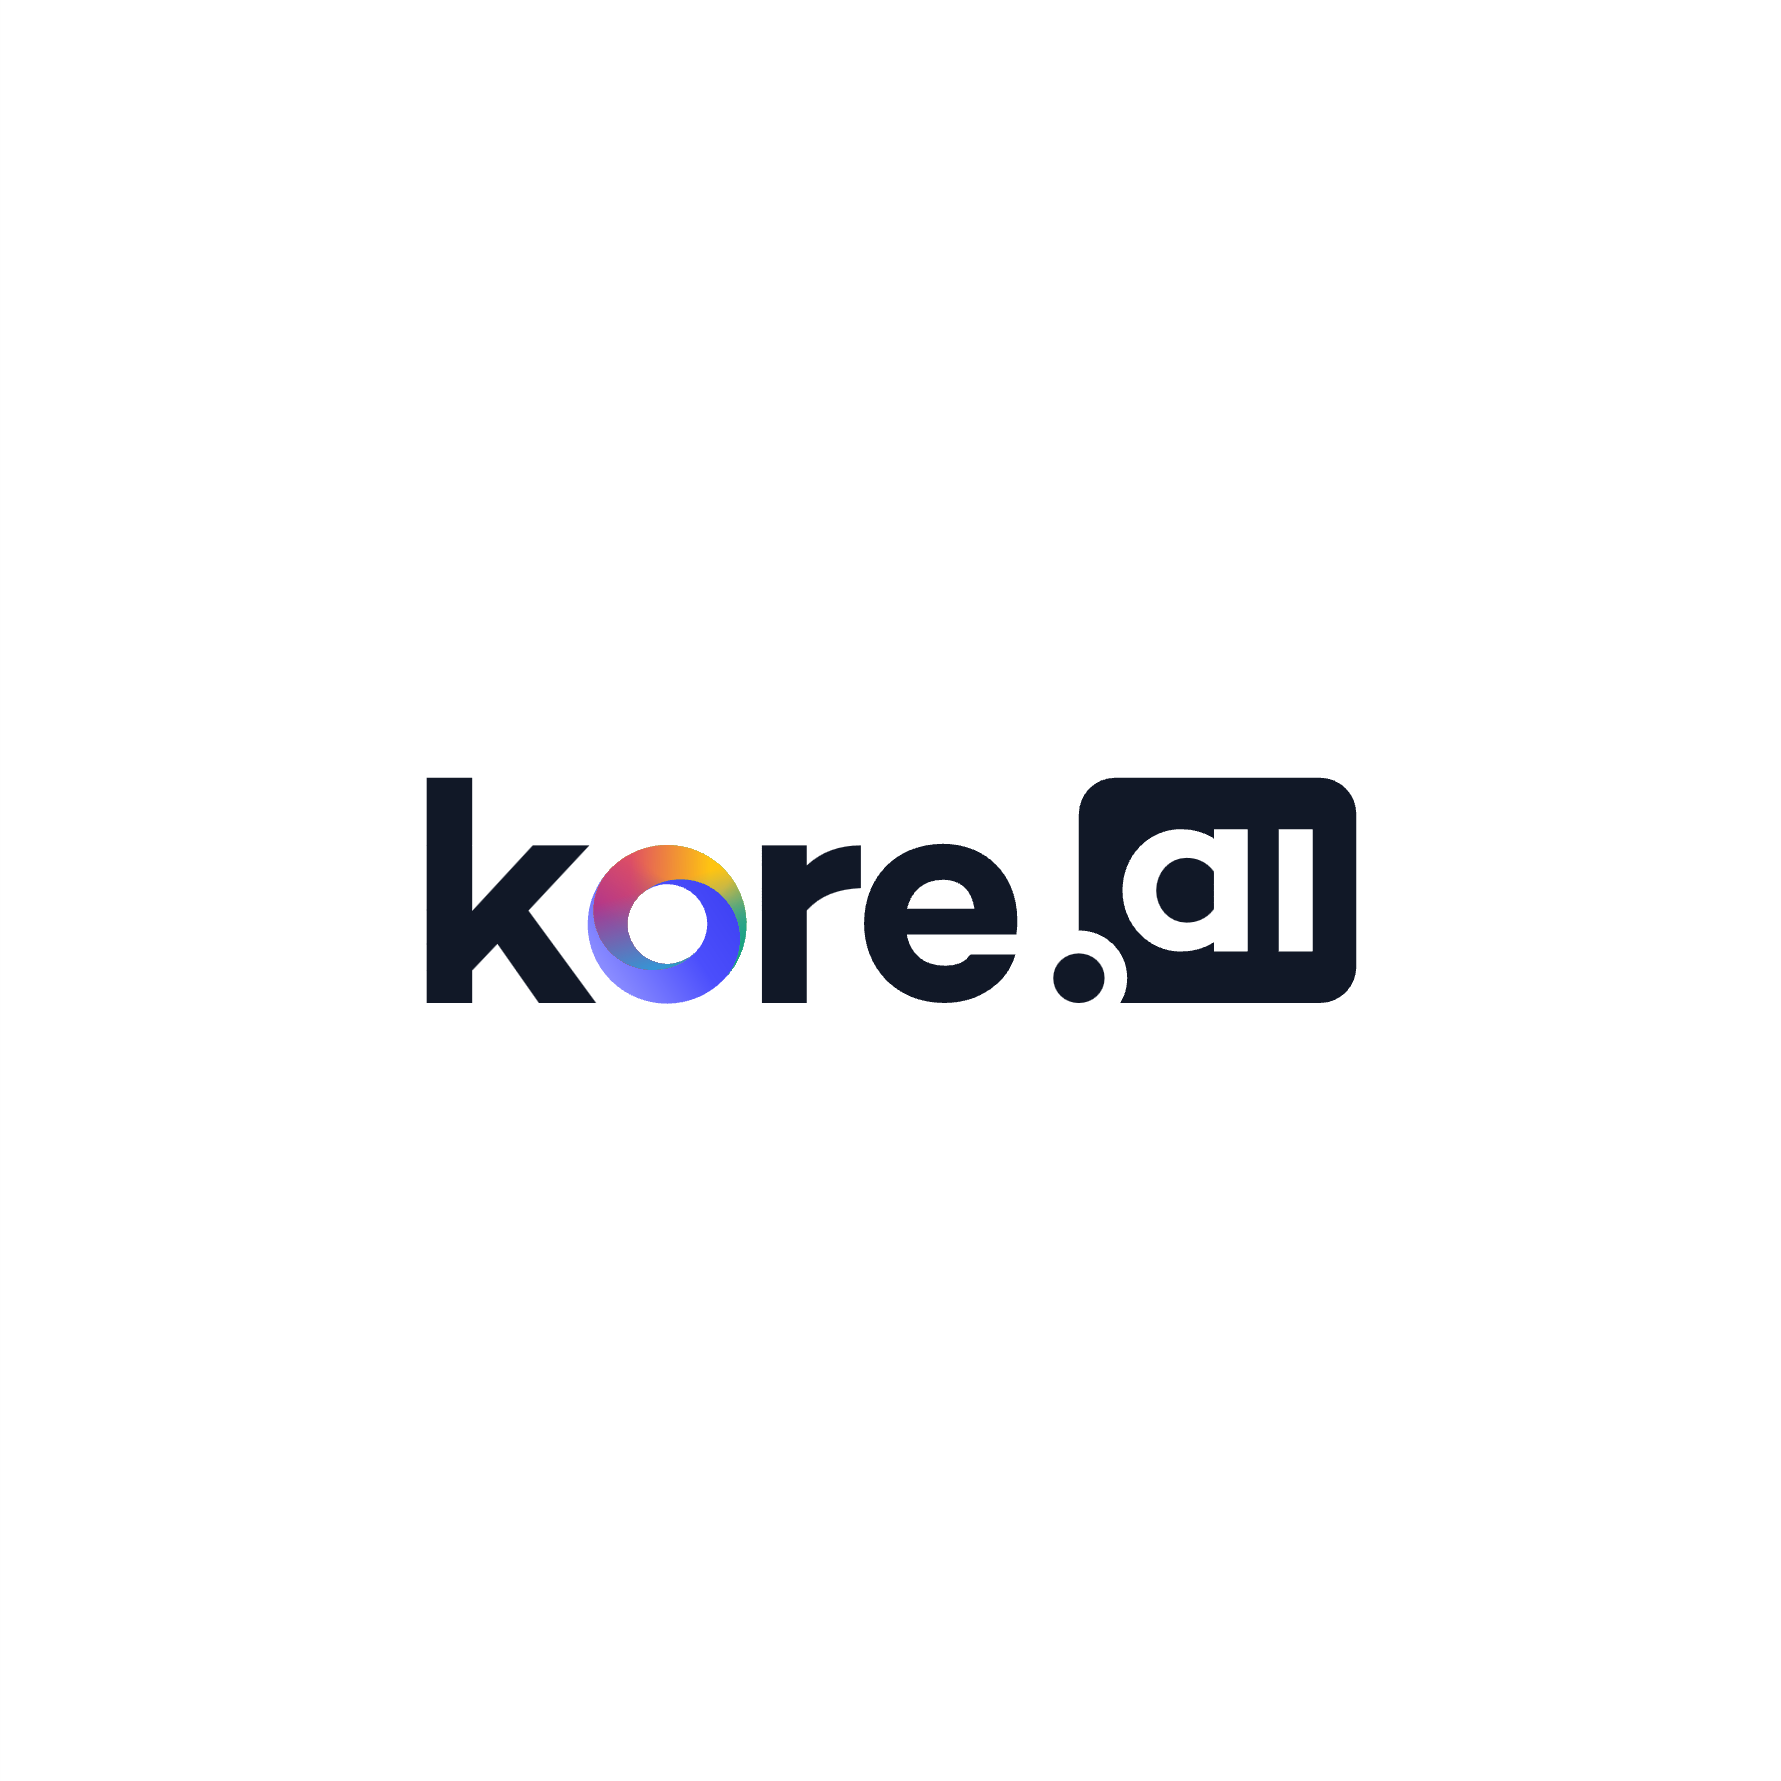 Koreai Logo 250 X 250